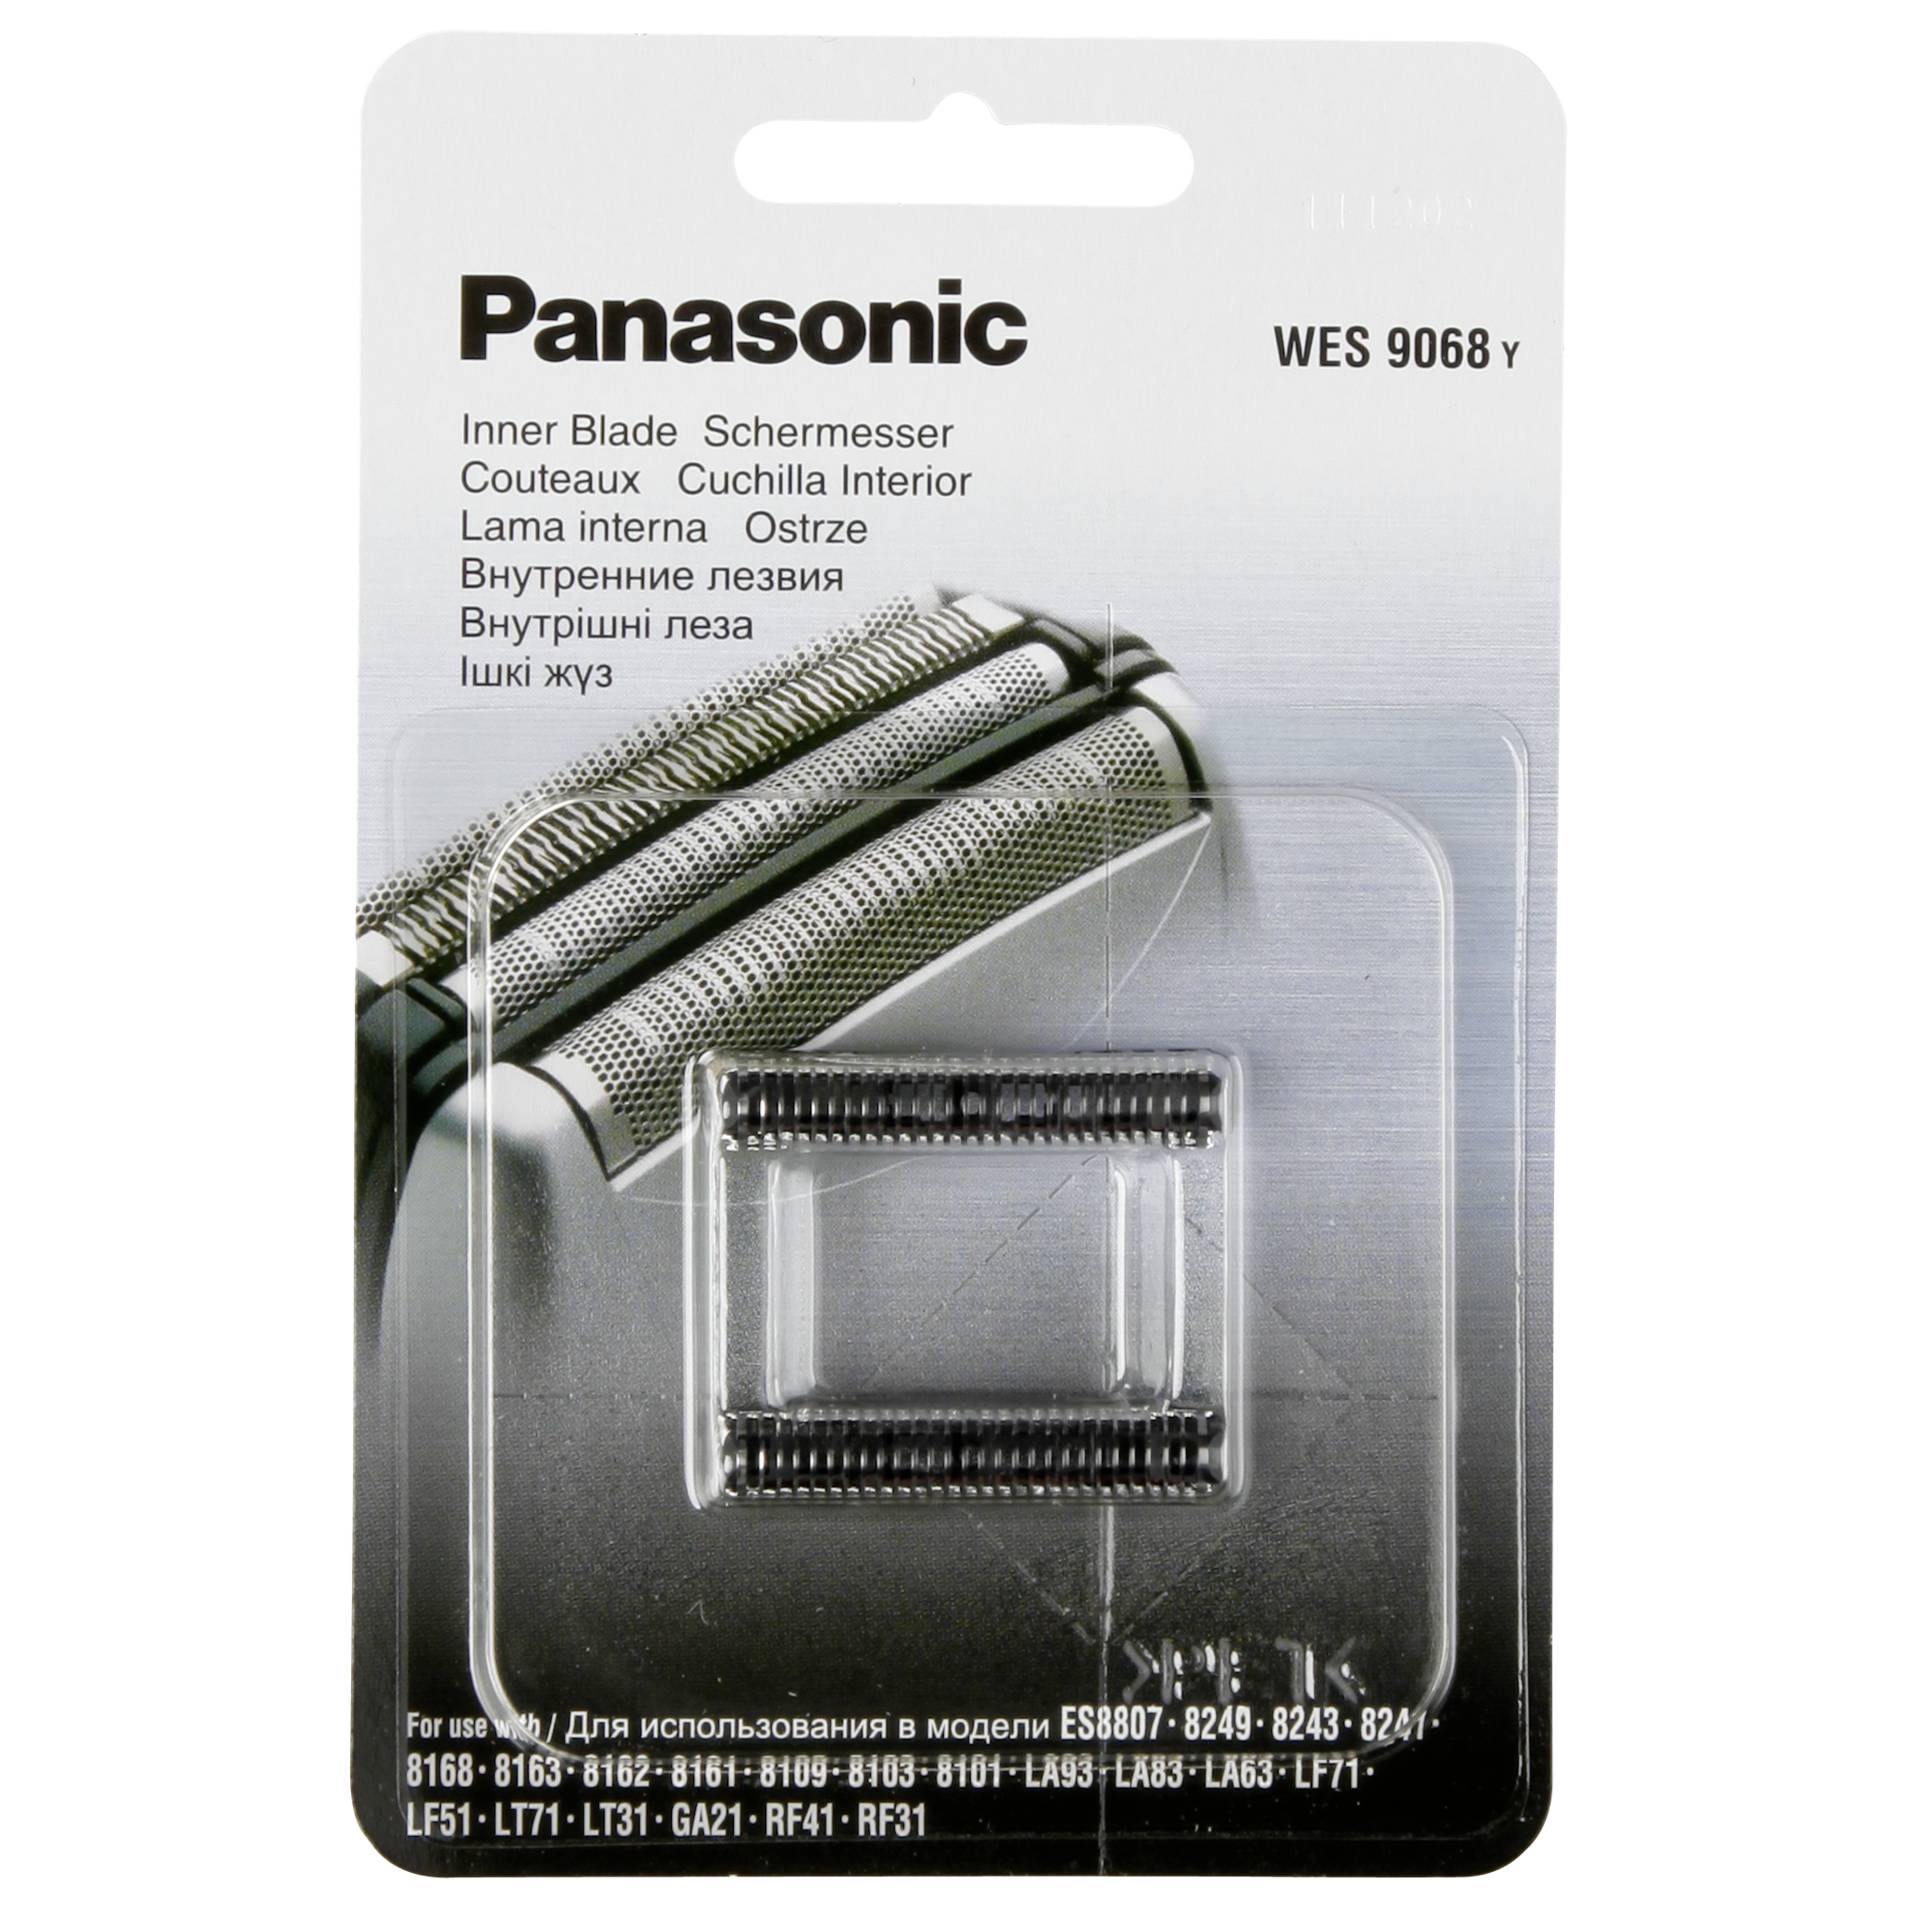 Panasonic WES 9068 Y1361